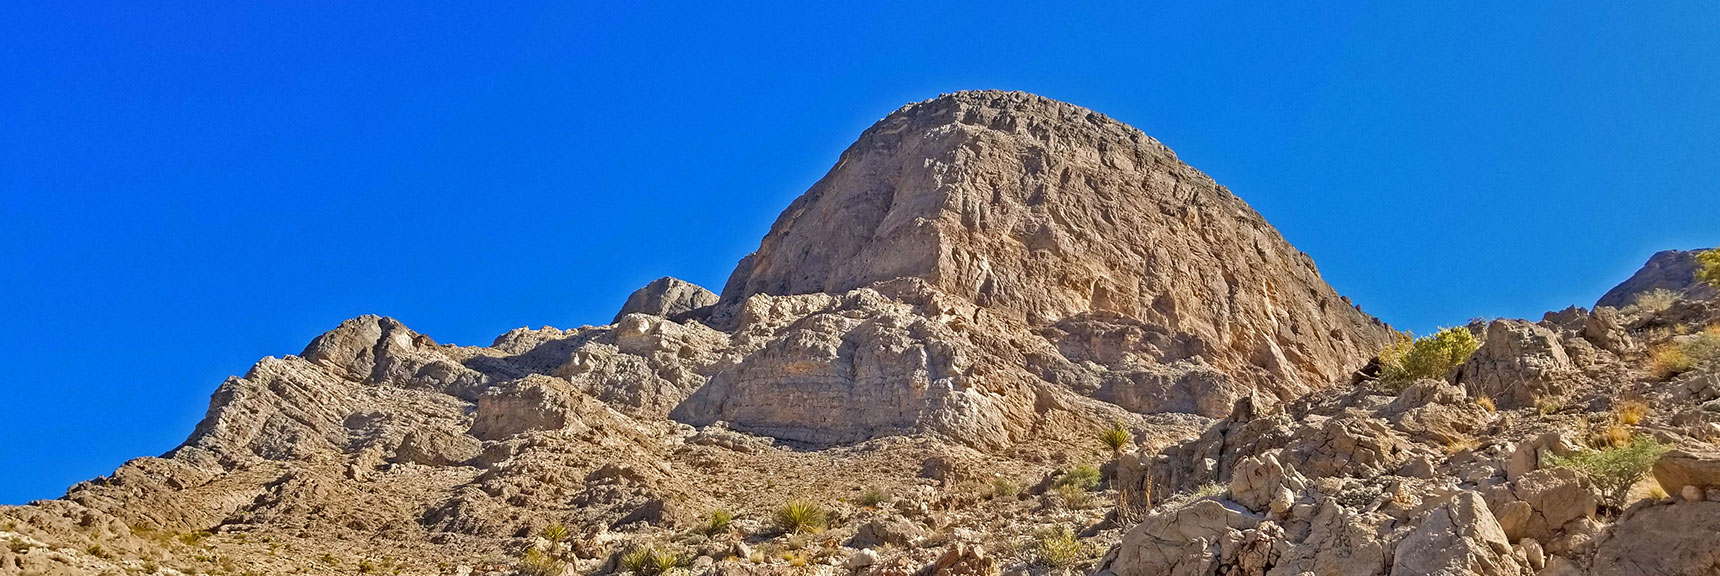 Double Cliffs Guard Little El Padre. Class 5 to Ascend Directly | Little La Madre Mt, Little El Padre Mt, Little Burnt Peak | Near La Madre Mountains Wilderness, Nevada